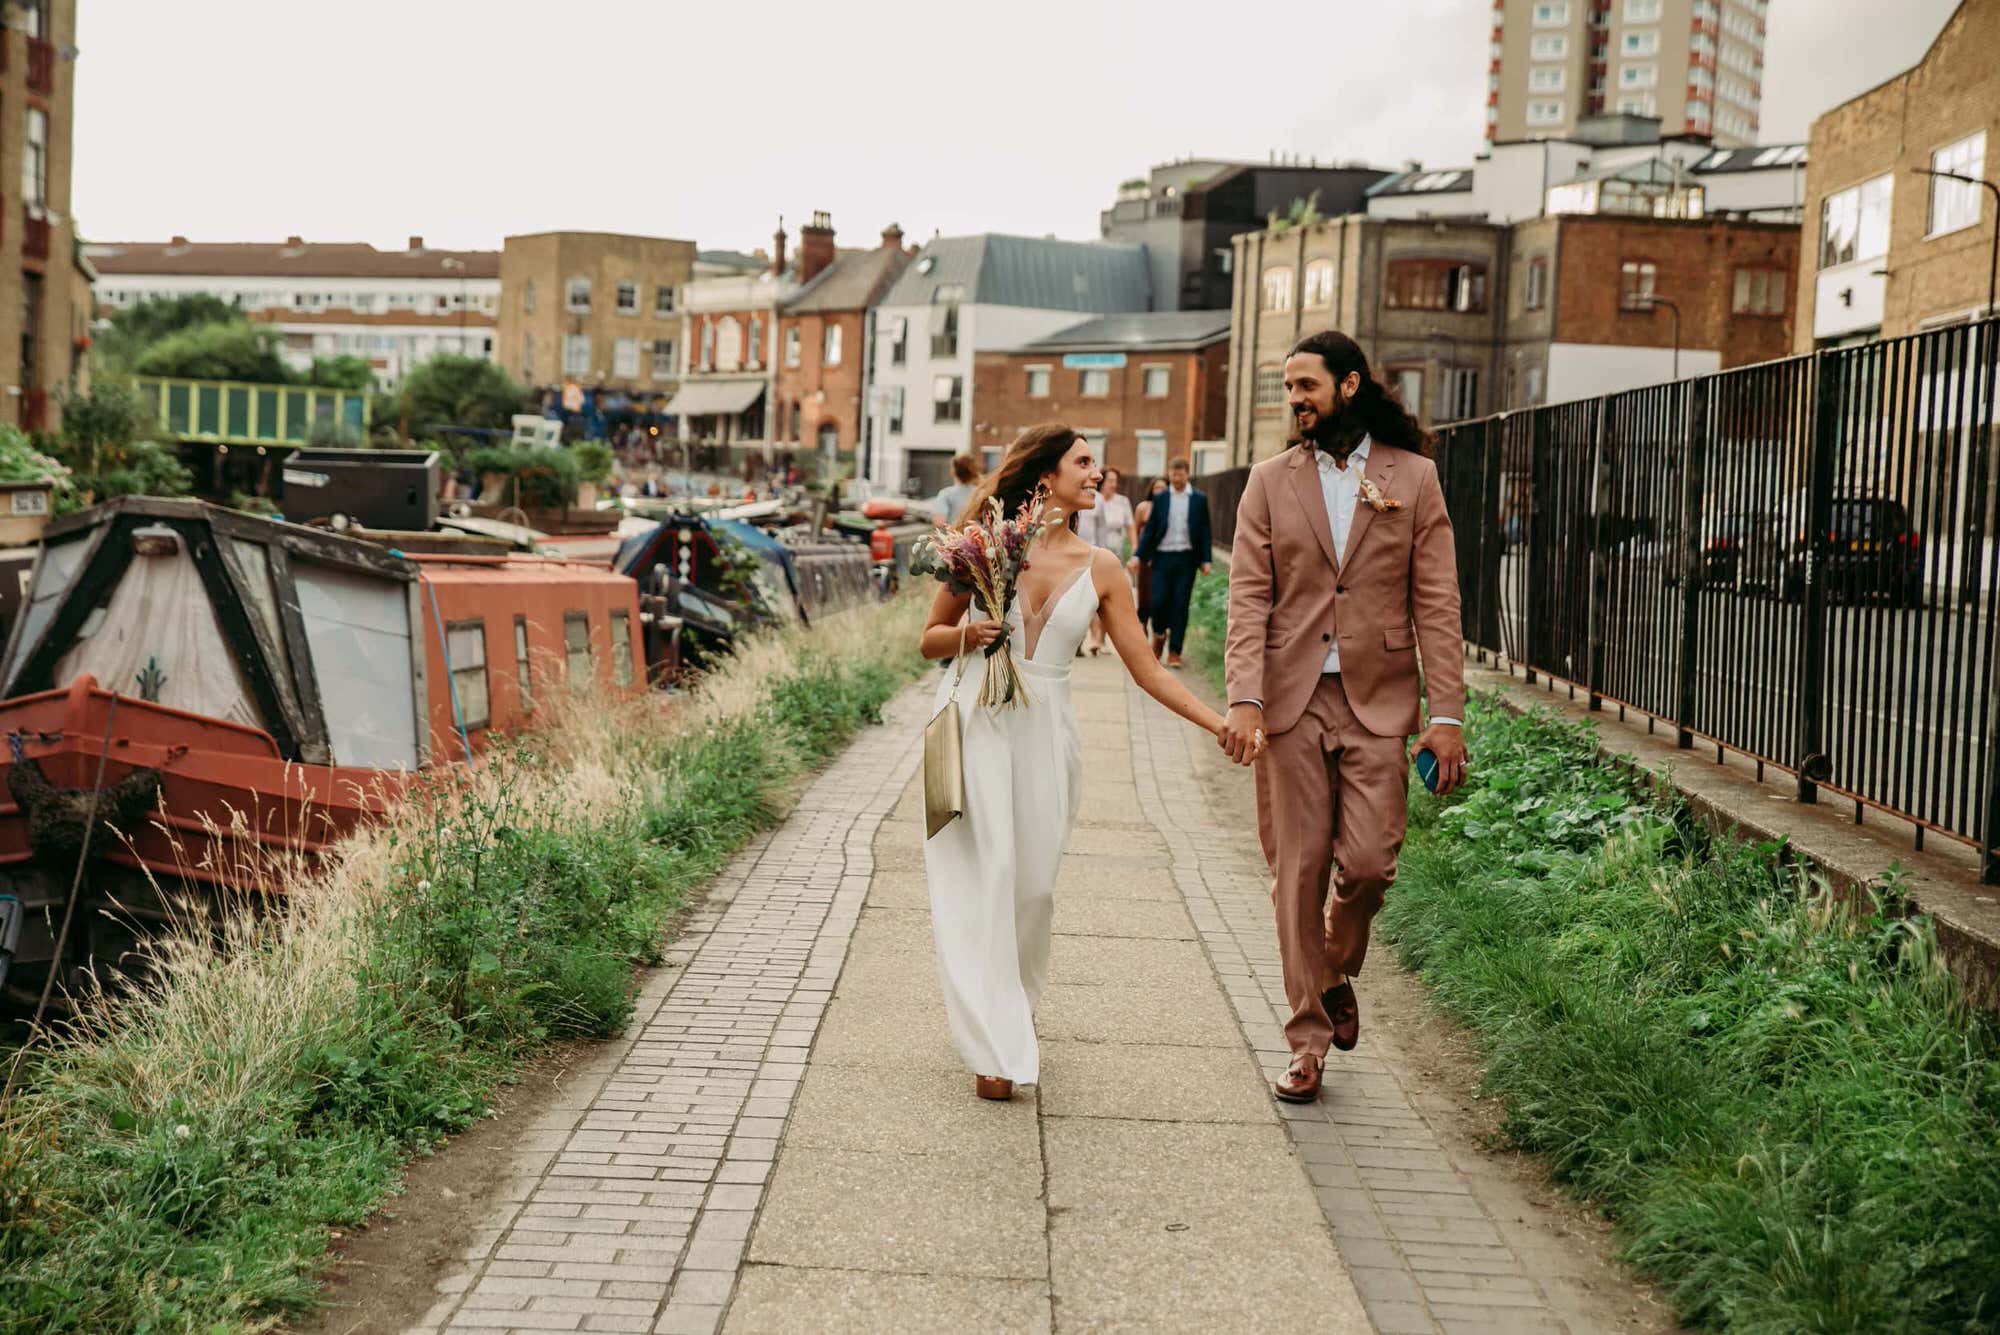 regents-canal-quirky-wedding-roshni-photography-london-wedding-photographer